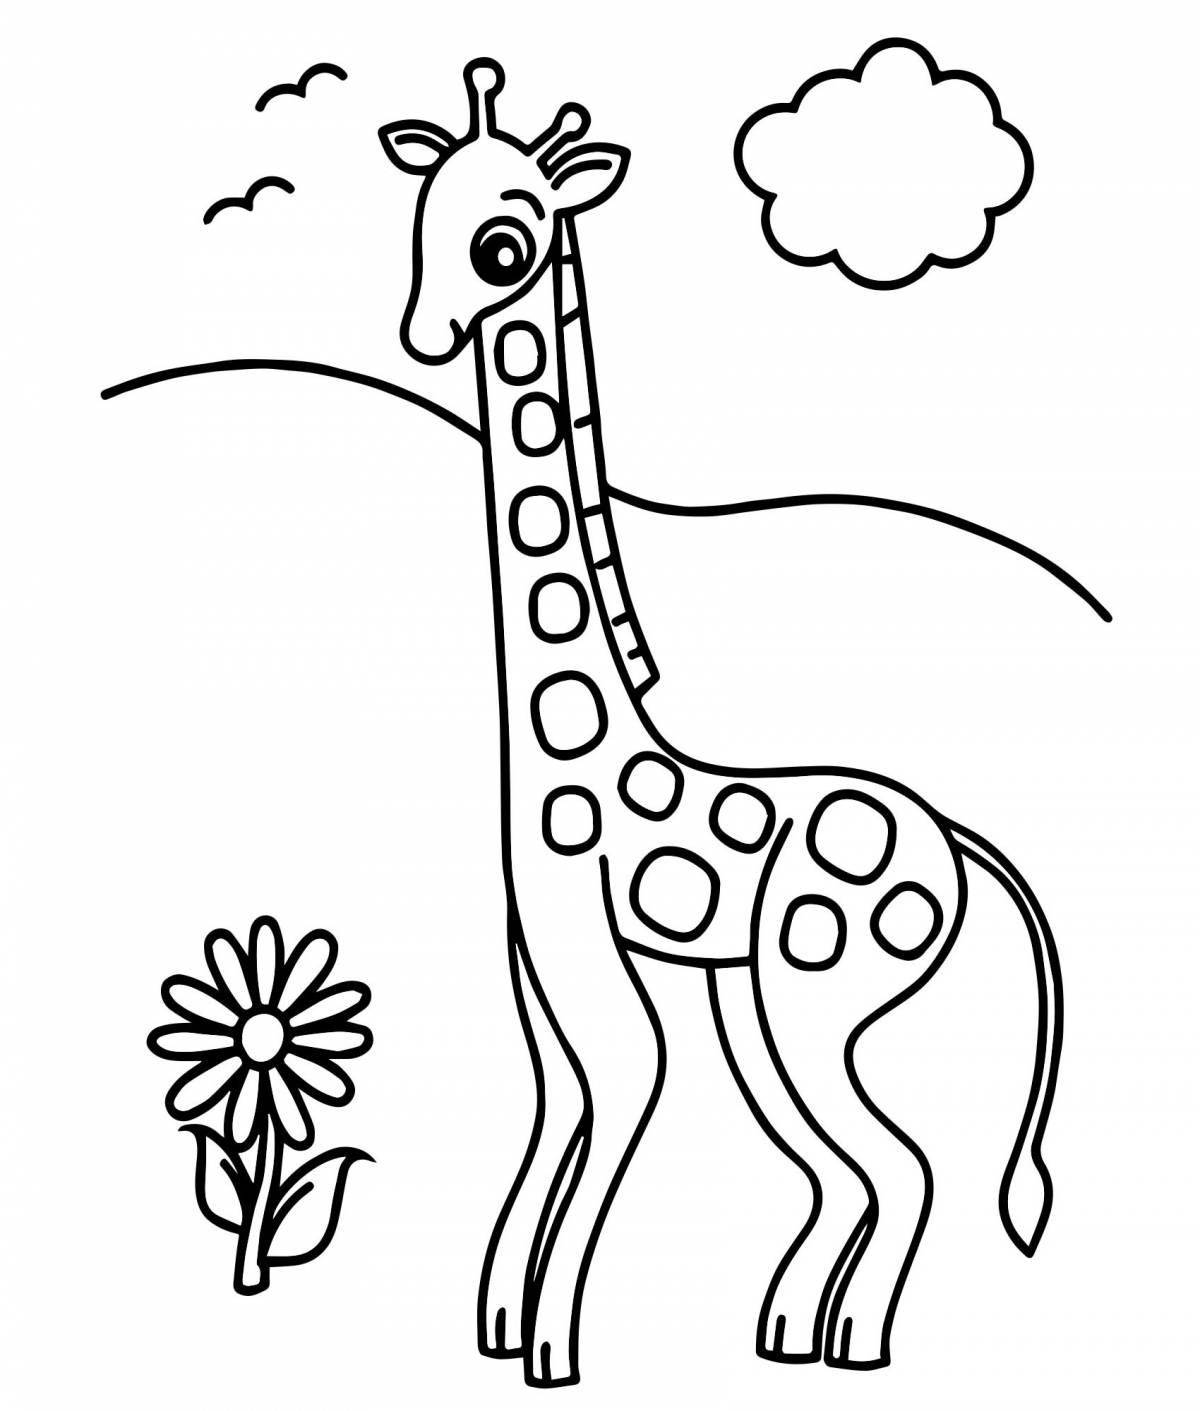 Animated giraffe drawing for kids